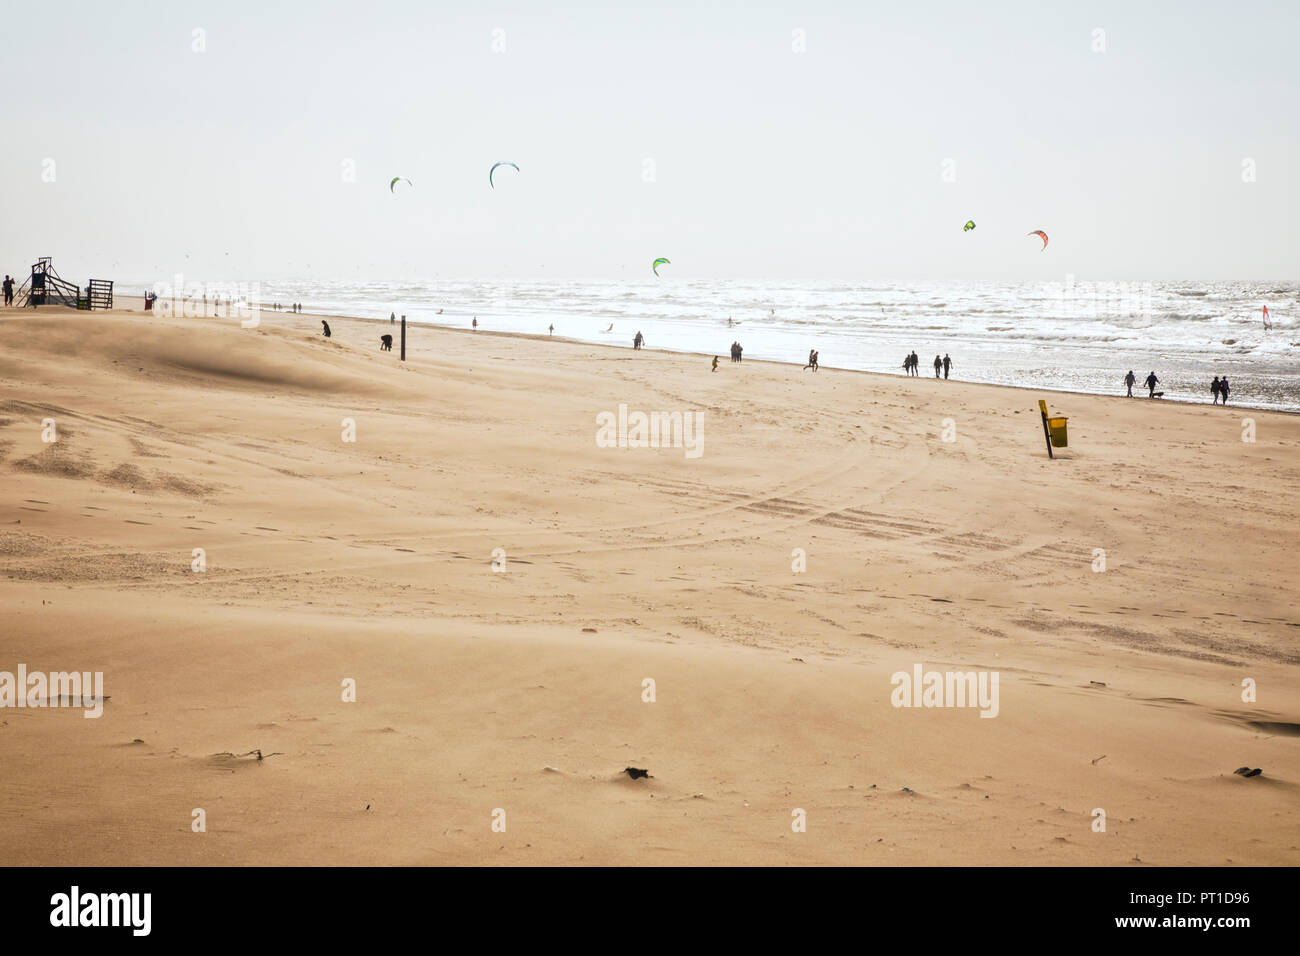 People walking and kite surfing at North Sea beach of Noordwijk aan Zee, The Netherlands. Stock Photo